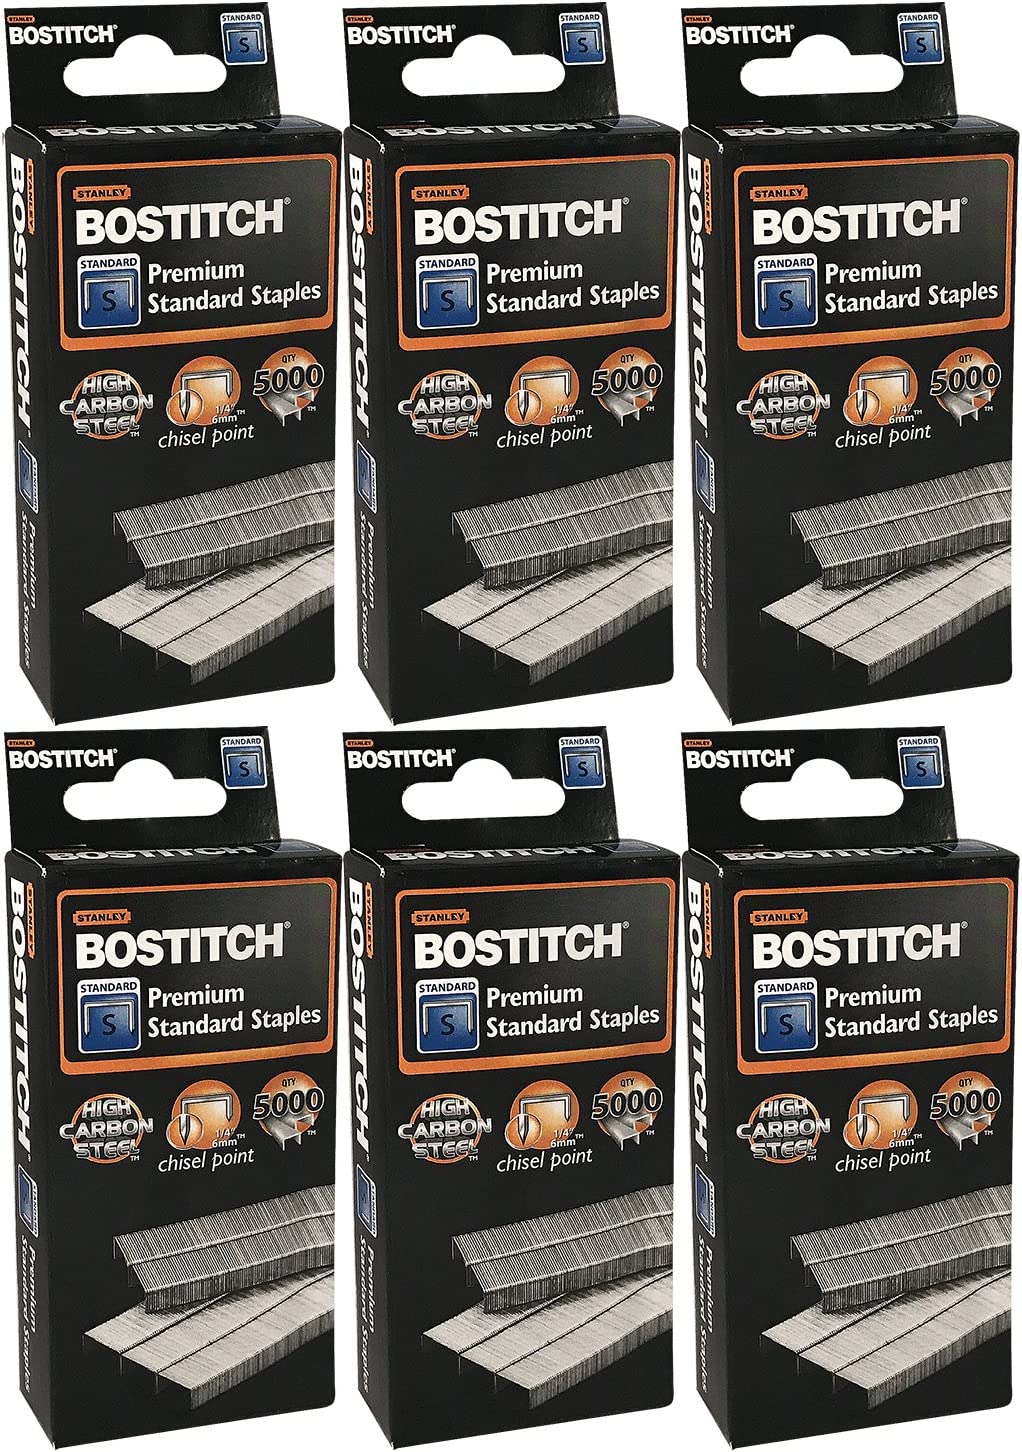 Stanley Bostitch Premium Standard Staples 1/4" (6mm) High Carbon Steel Chisel Point Bulk 30000 Value Pack (SBS191/4CPR)